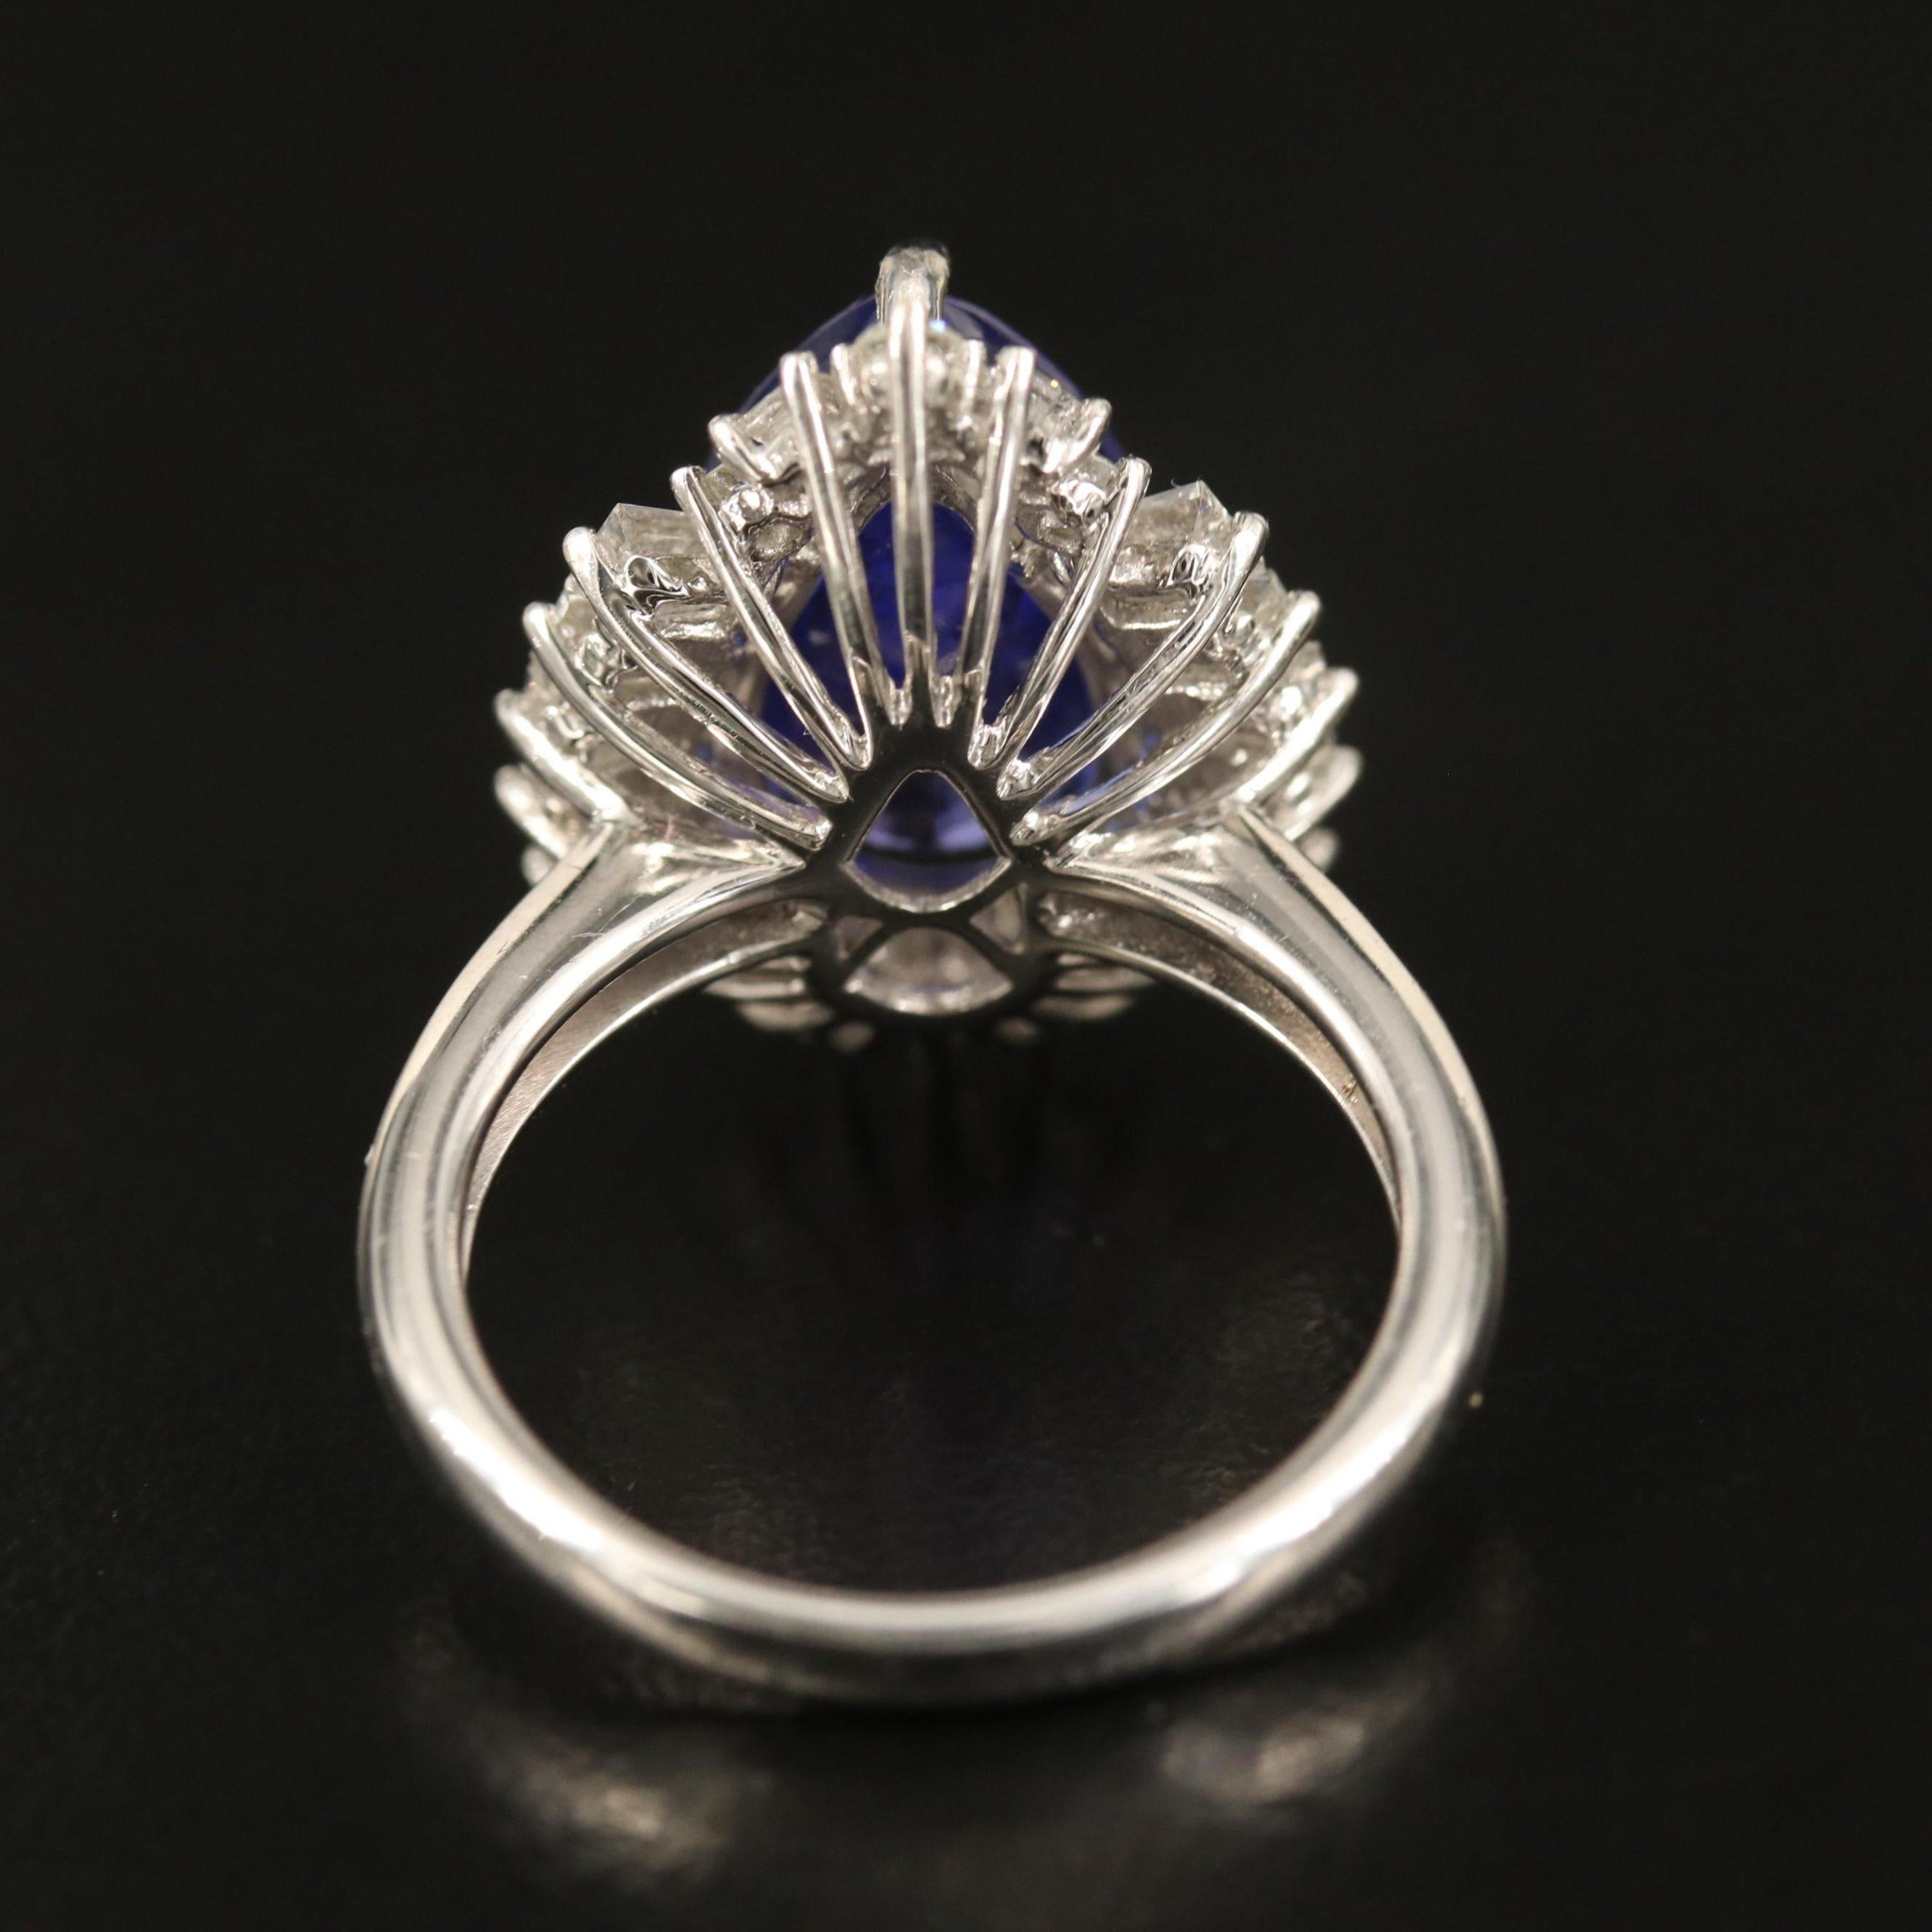 For Sale:  5.9 Carat Pear Cut Tanzanite Engagement Ring Art Deco Halo Diamond Wedding Ring  3